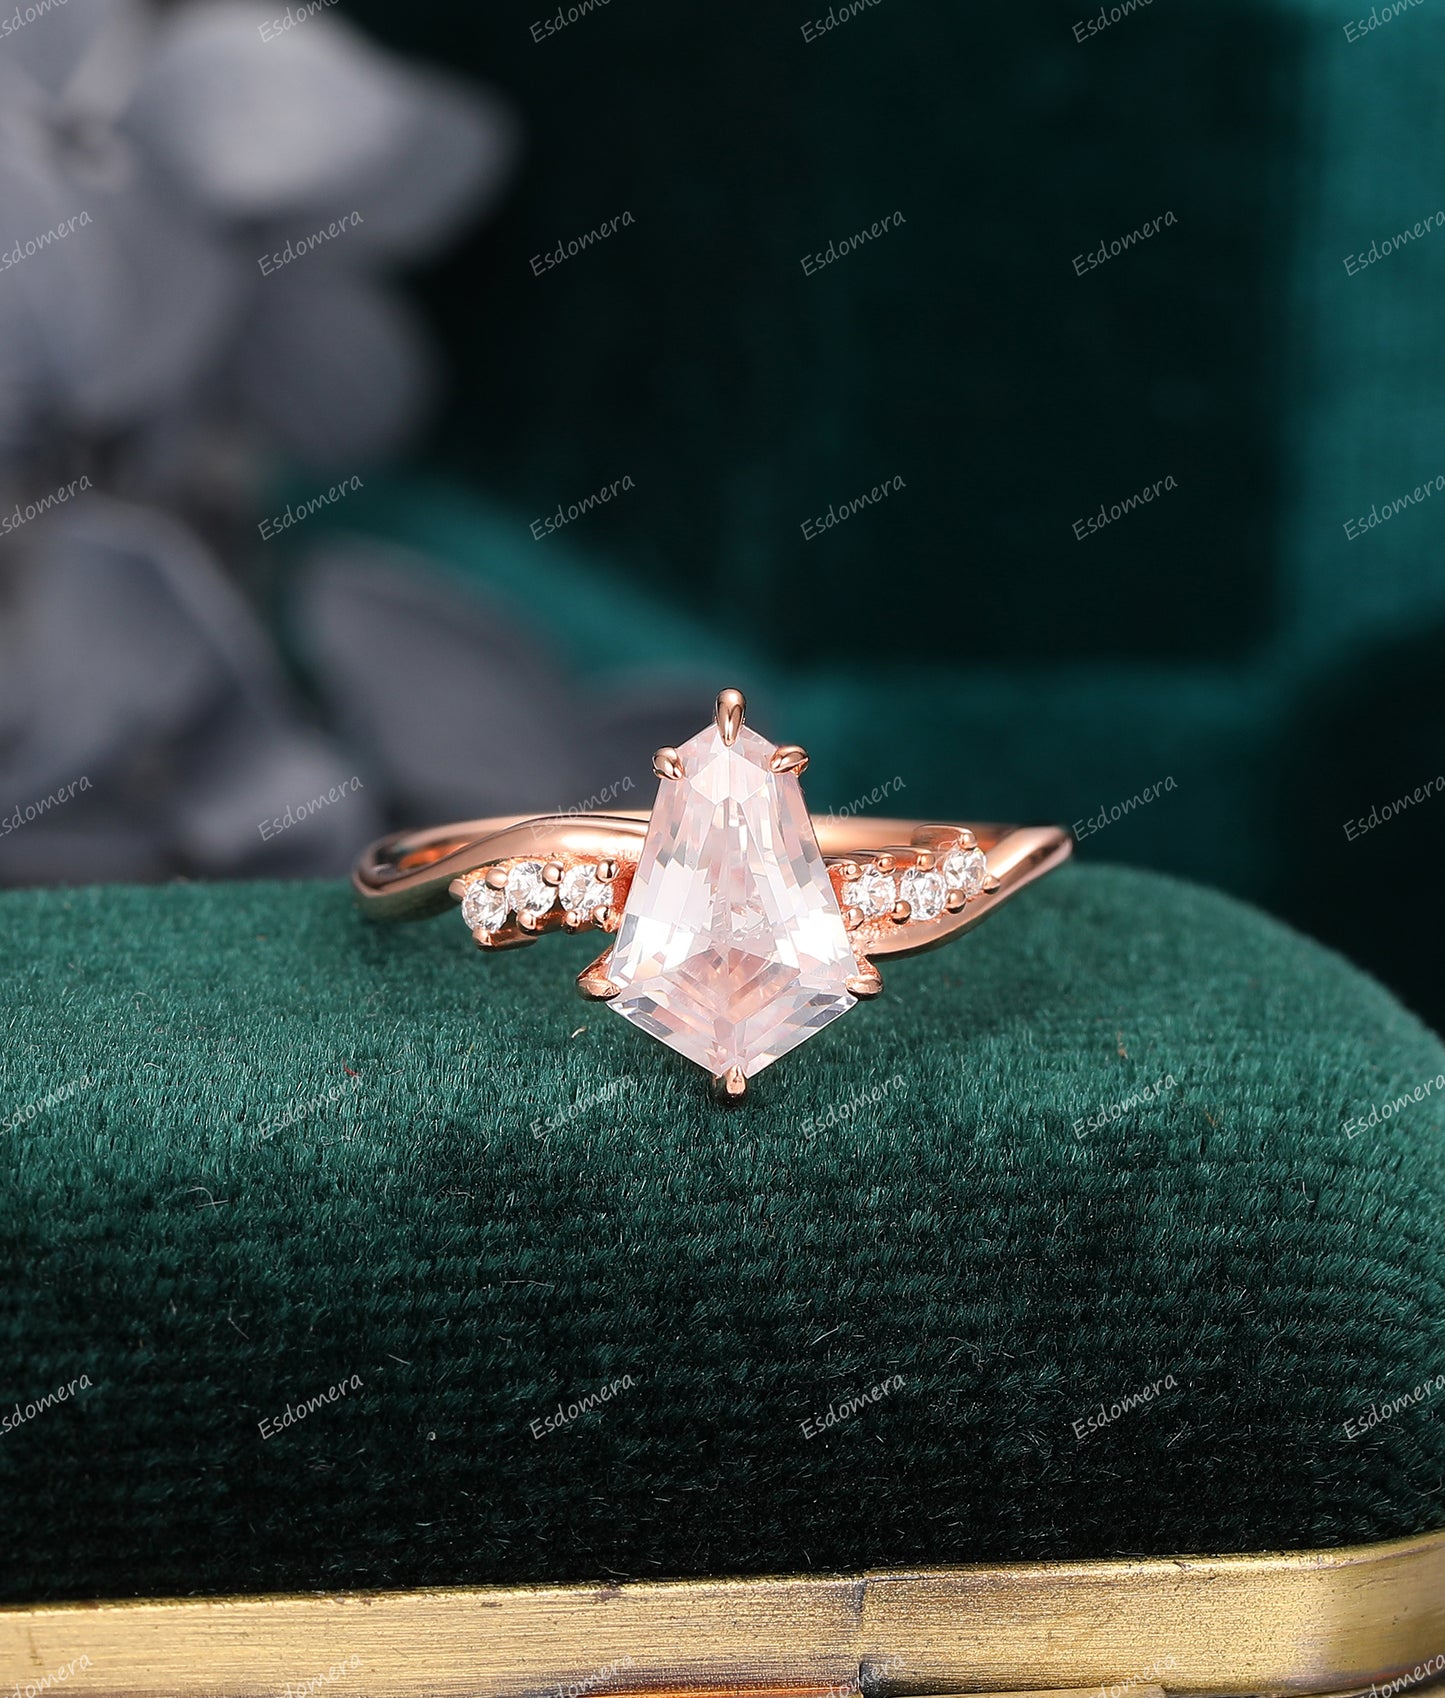 2.10CT Pointed Shield Shaped Moissanite Engagement Ring, Soild 14K Gold Anniversary Ring For Her